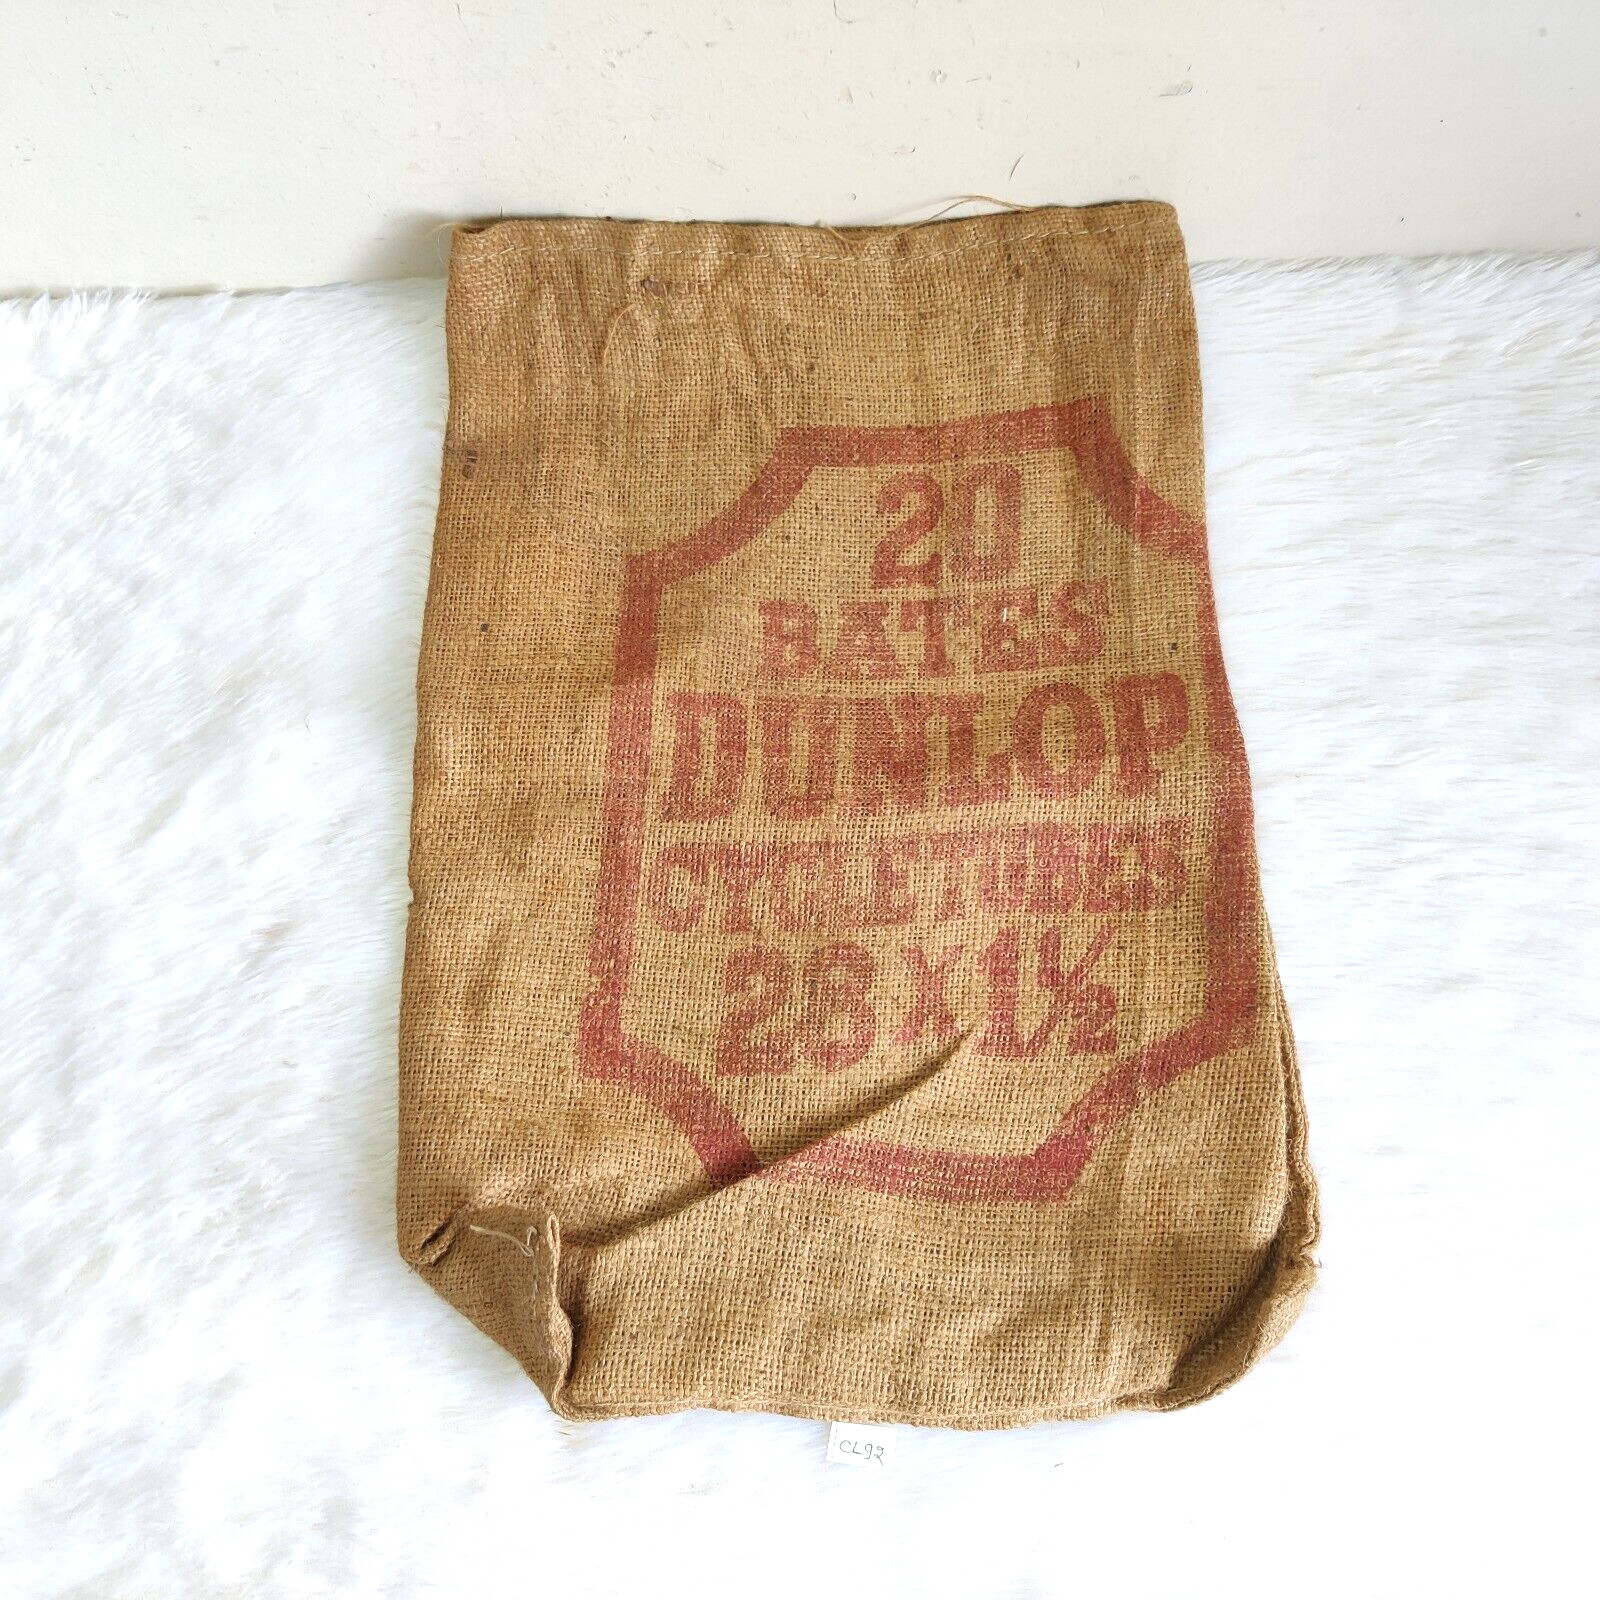 Vintage Dunlop Cycle Tubes Automobile Advertising Jute Bag Rare Collectible CL92